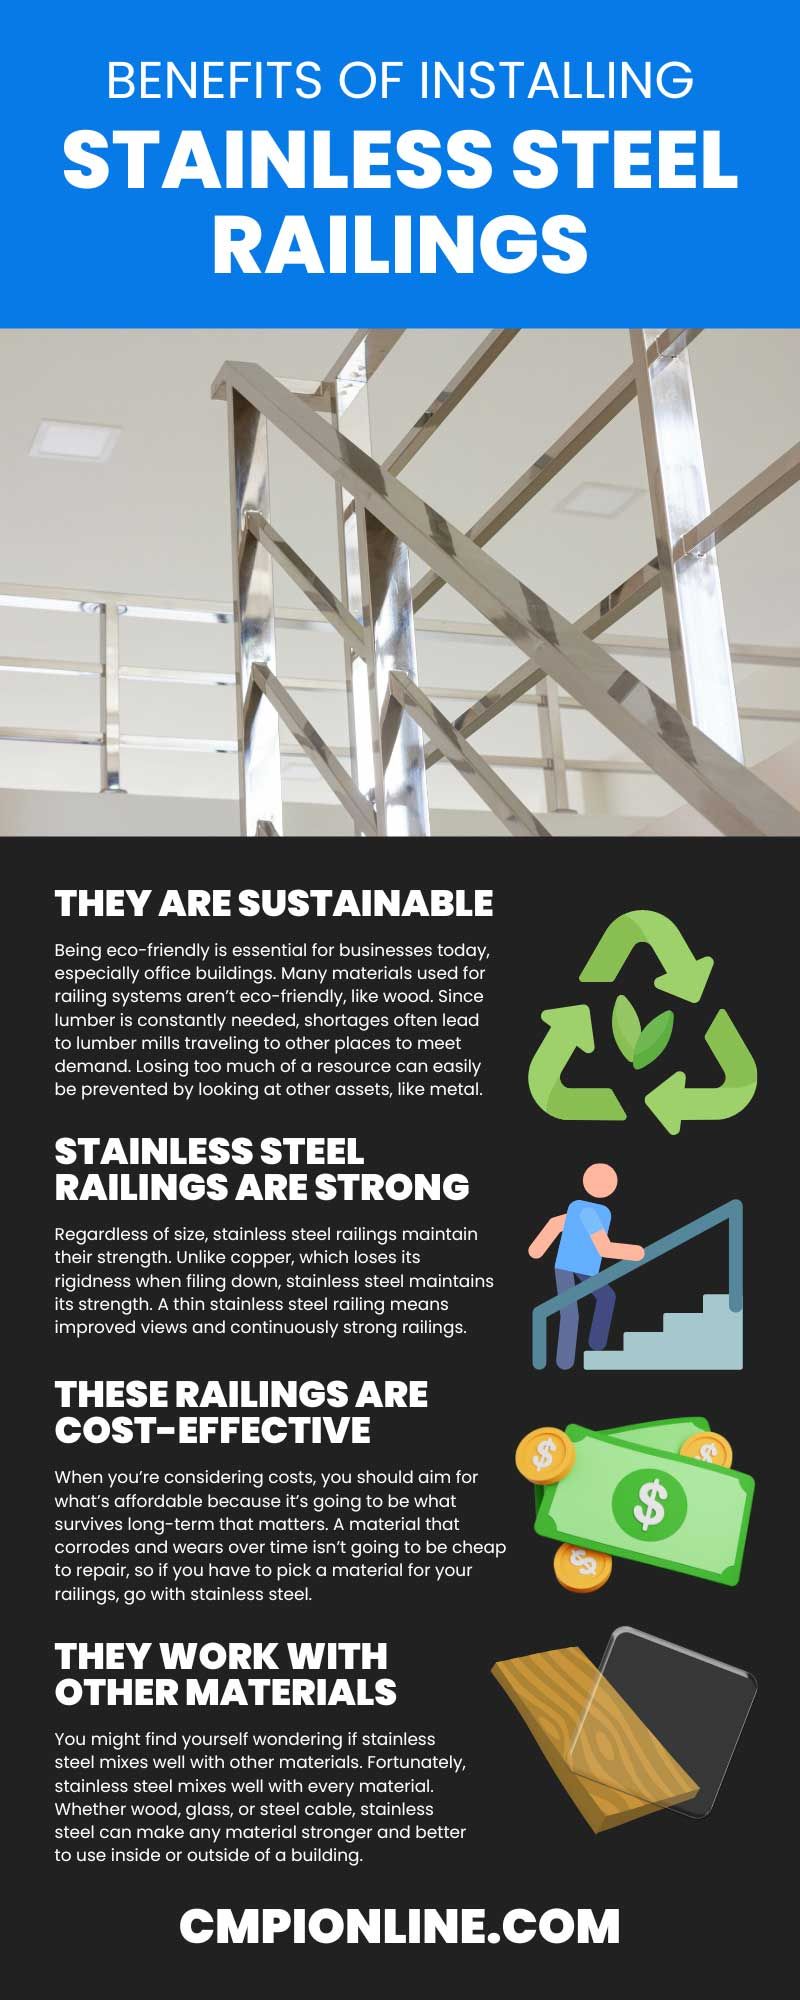 6 Benefits of Installing Stainless Steel Railings